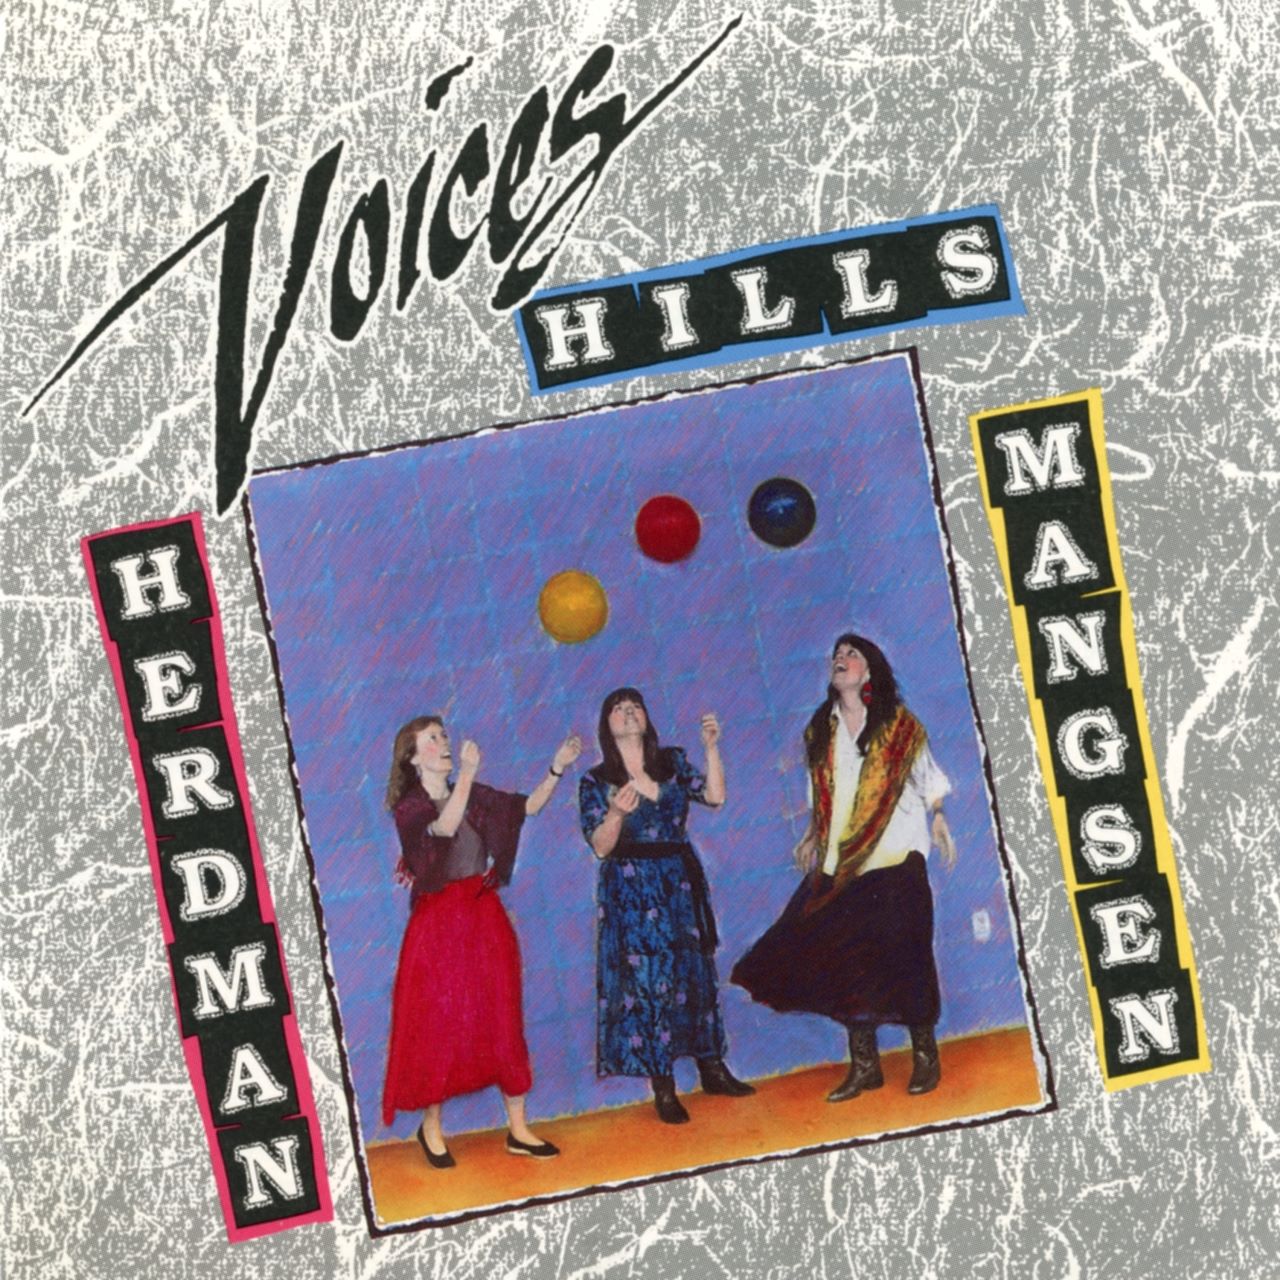 Herdman, Hills, Mangsen - Voices cover album